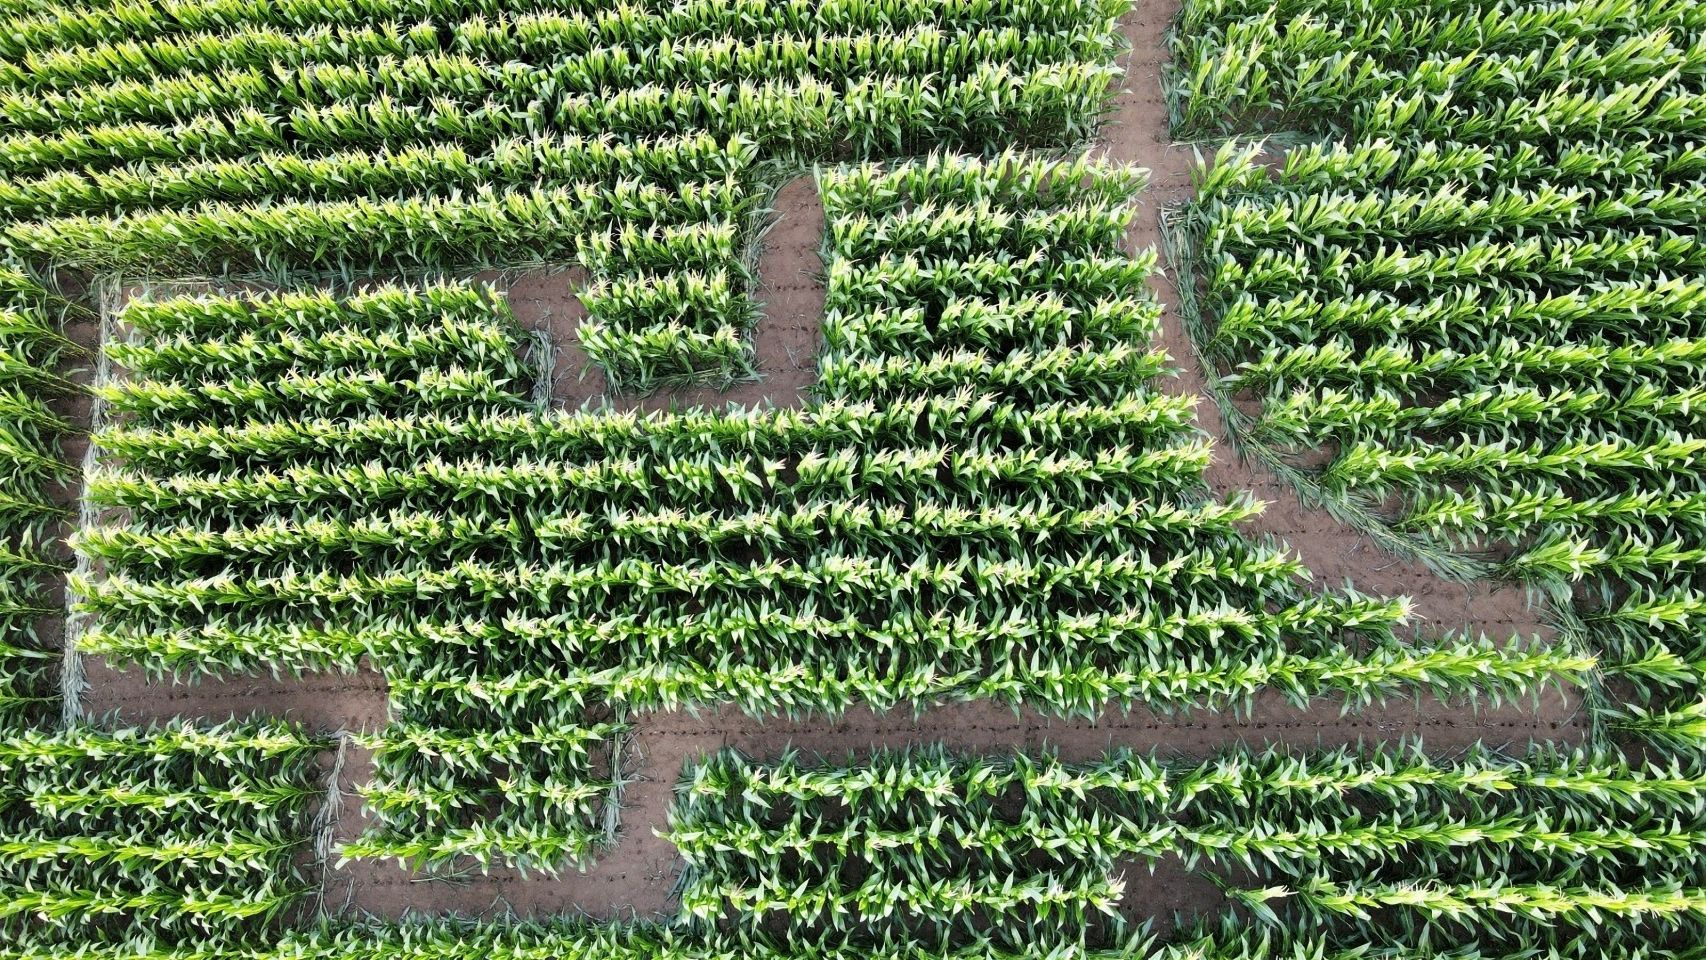 Vista aérea del laberinto de maíz en Cacheiras (Teo).